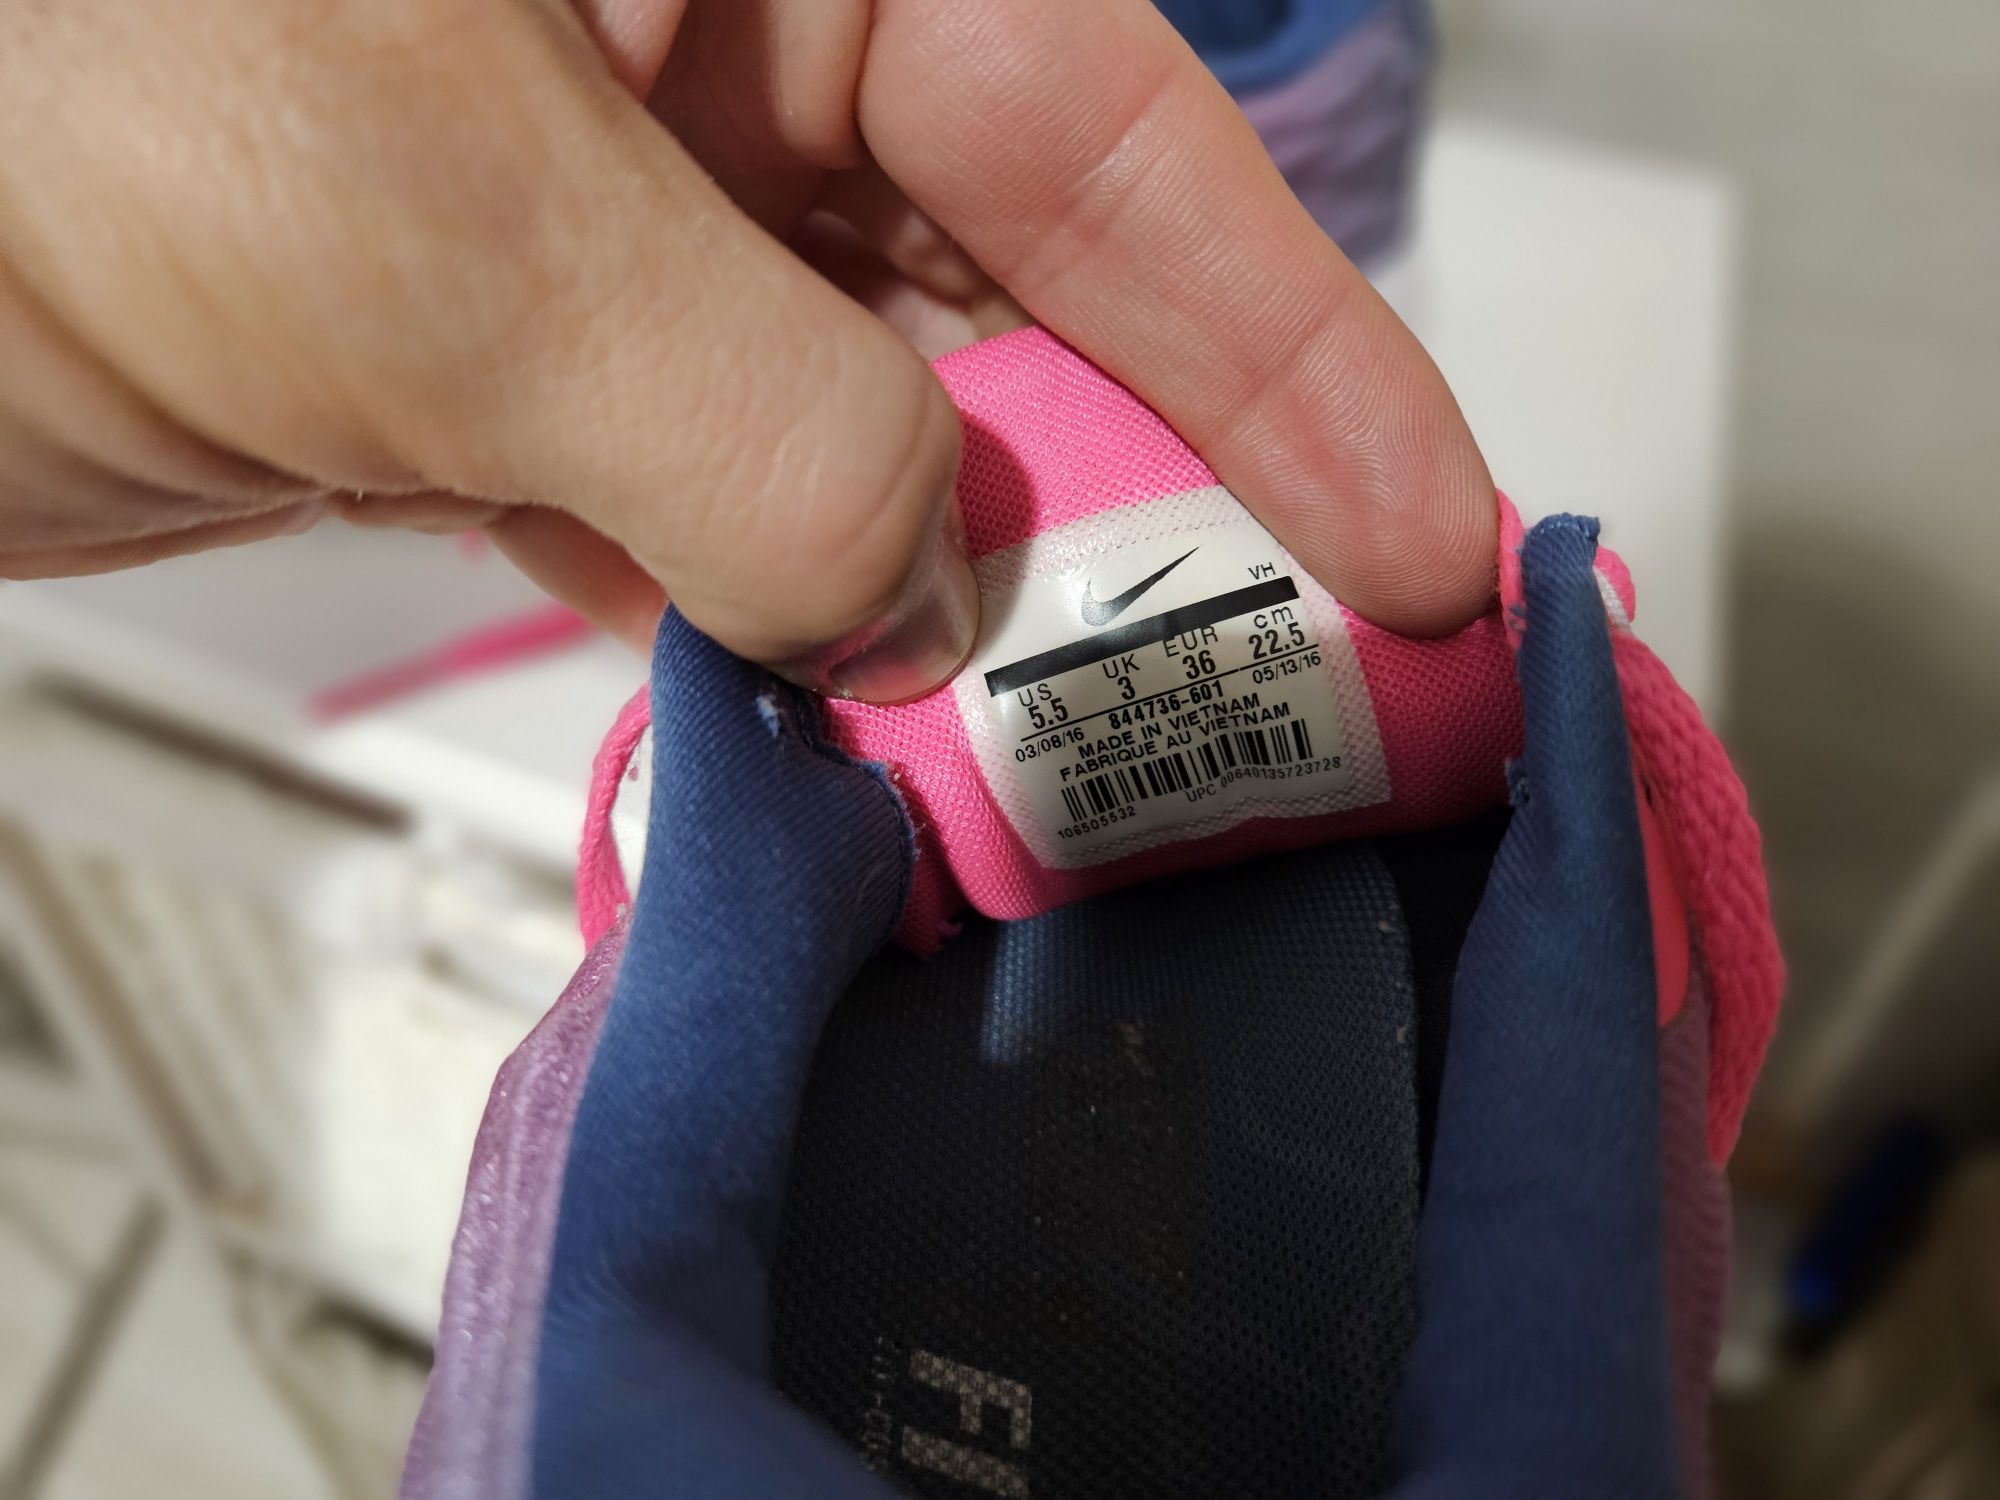 Nike Lunarstelos 36 , 22.5cm